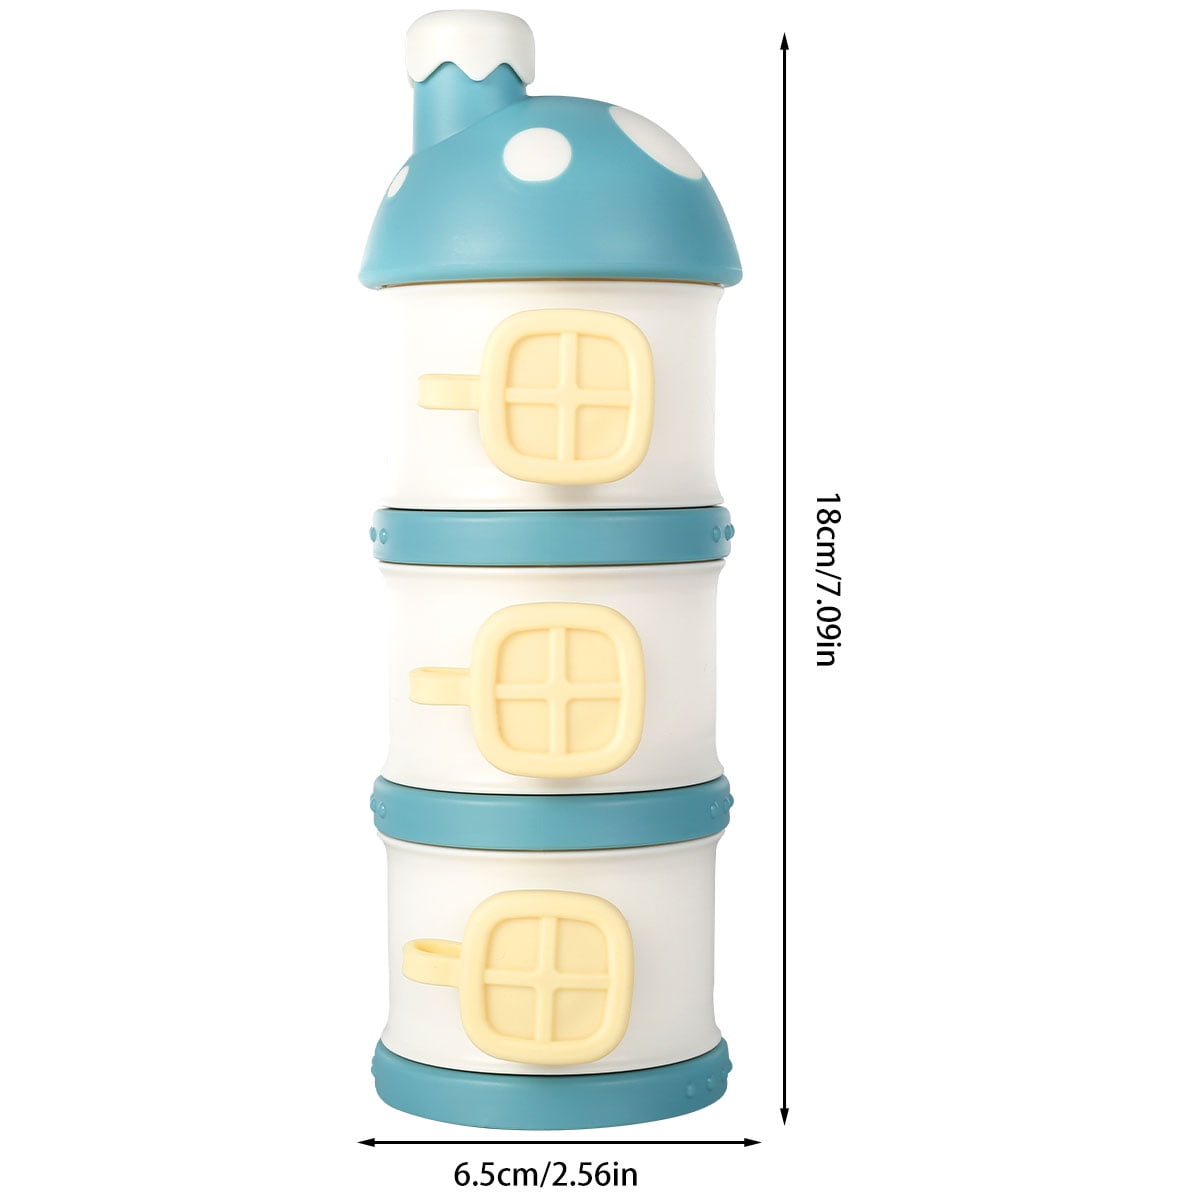 Formula Dispenser 5 Layers Portable Baby Kids Twist-Lock Stackable Milk Powder Formula Dispenser Container Pot Feeding Box Milk Cans for Outdoor Travel/Nighttime Nursing 